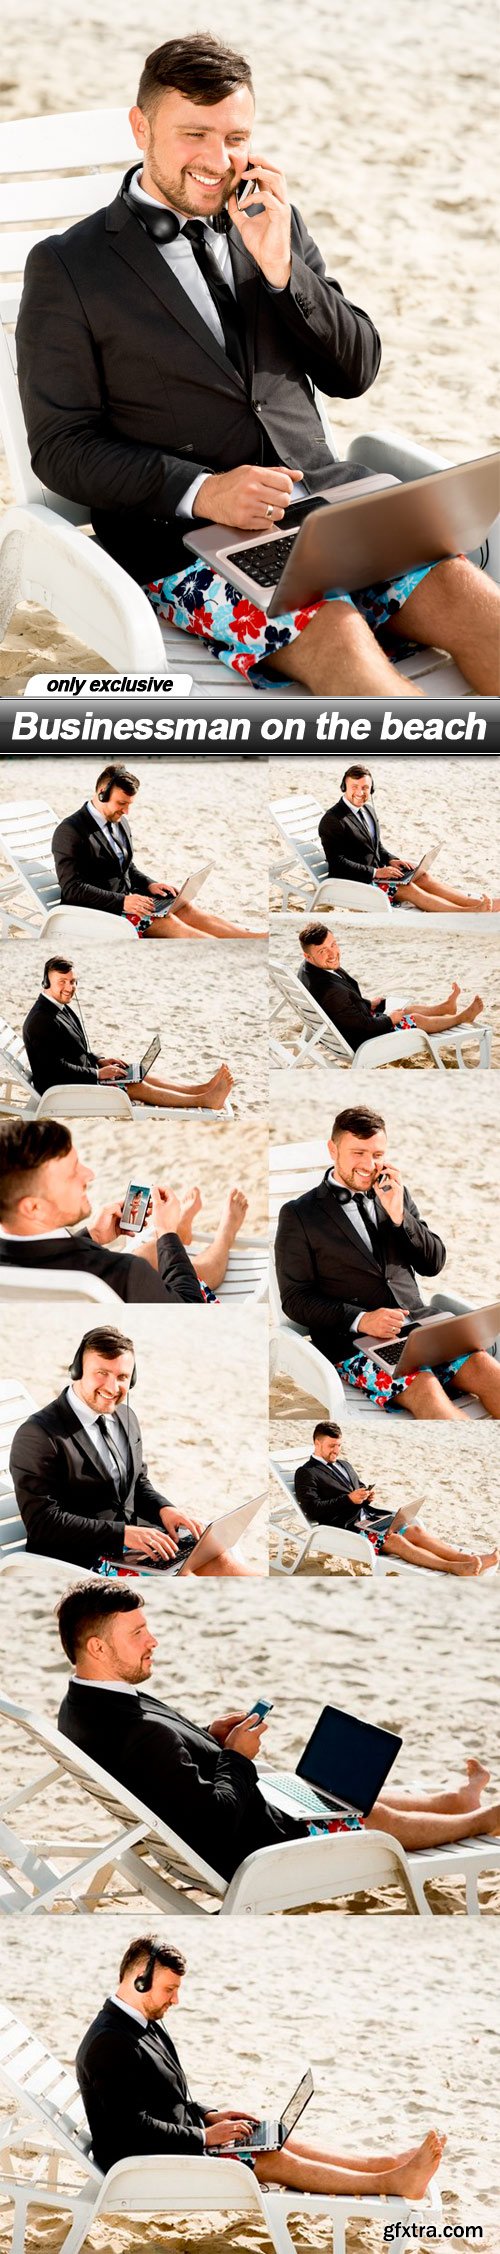 Businessman on the beach - 10 UHQ JPEG